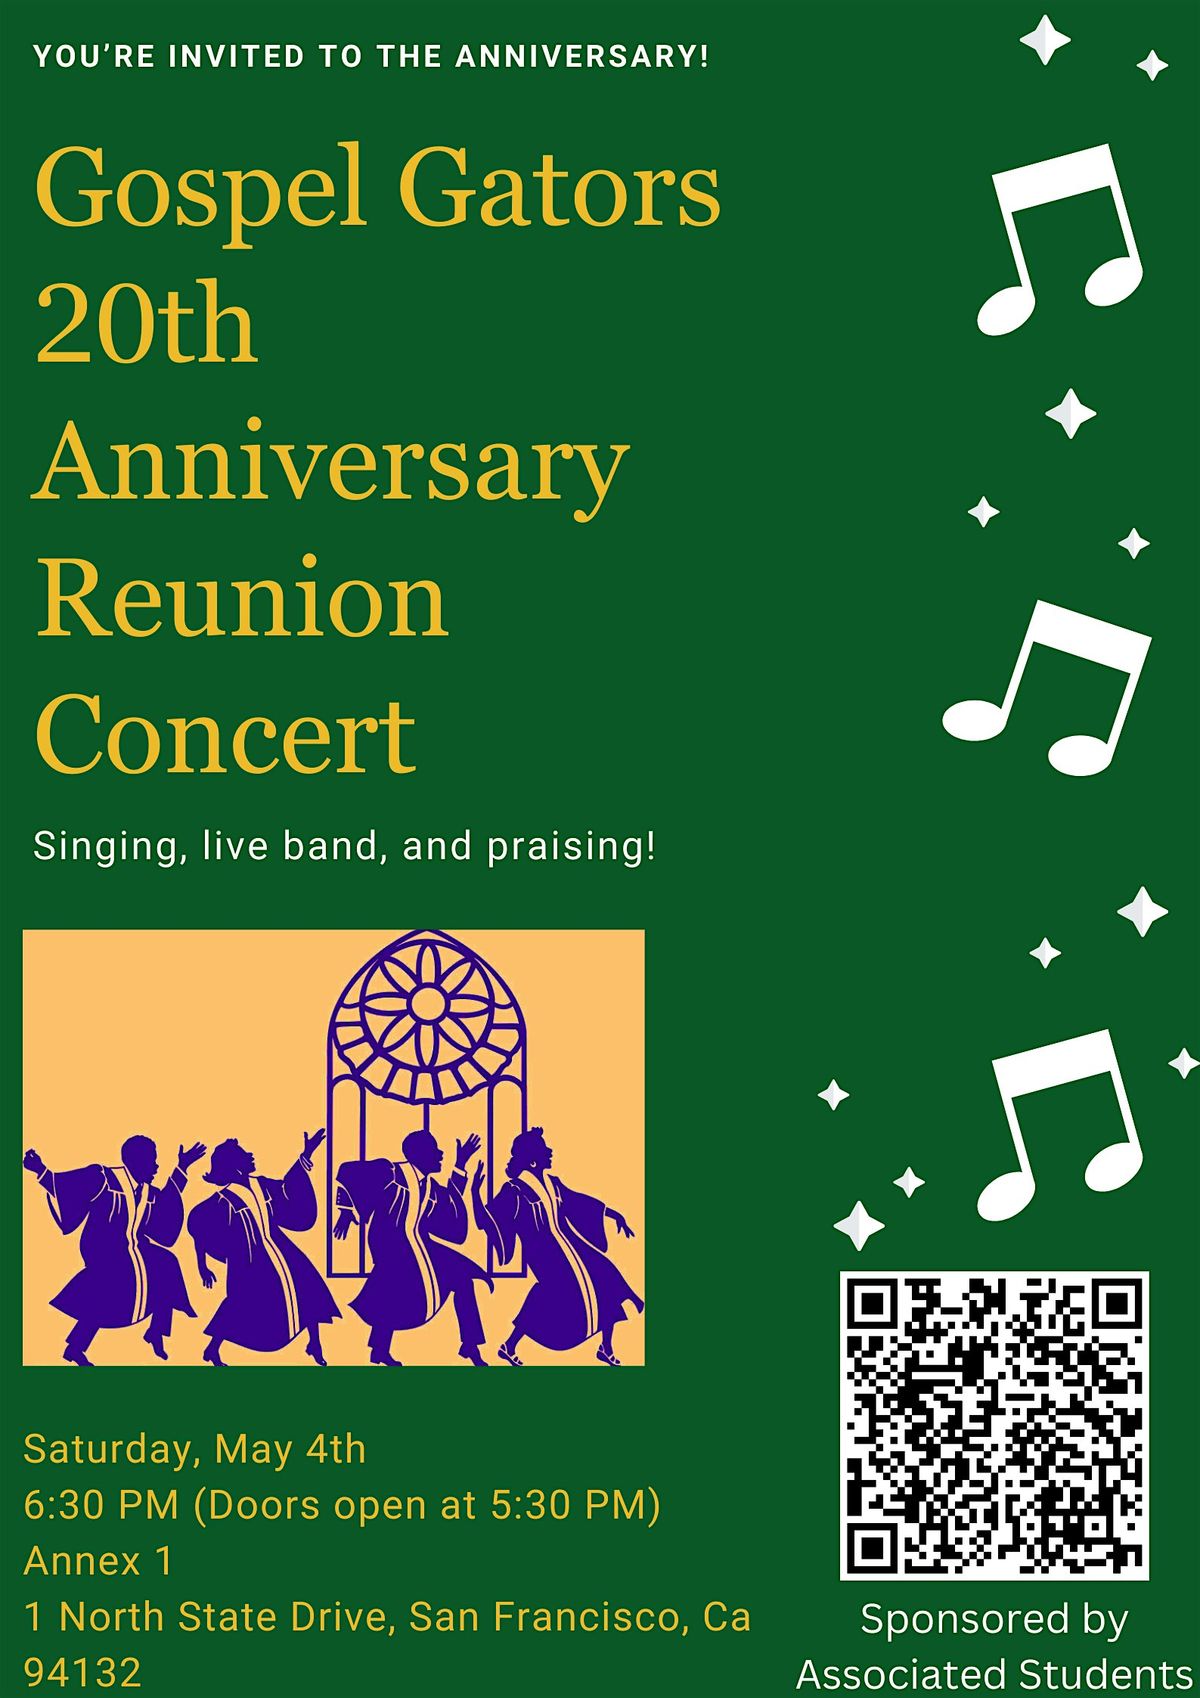 Gospel Gators 20th Anniversary Reunion Concert